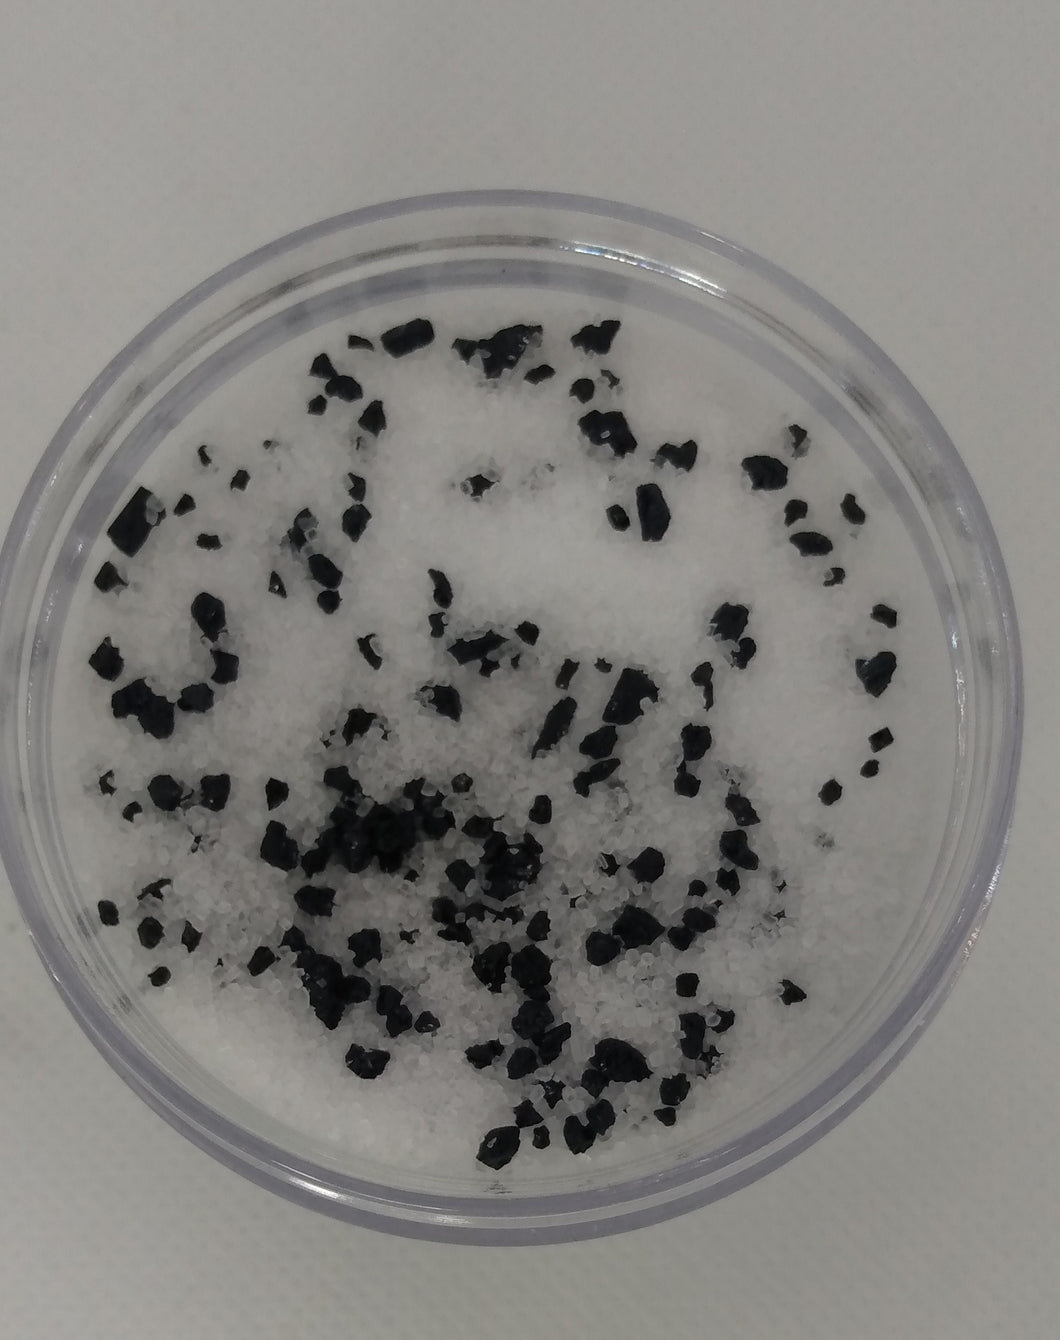 Bejewelled Black Tourmaline Crystal Body Soak